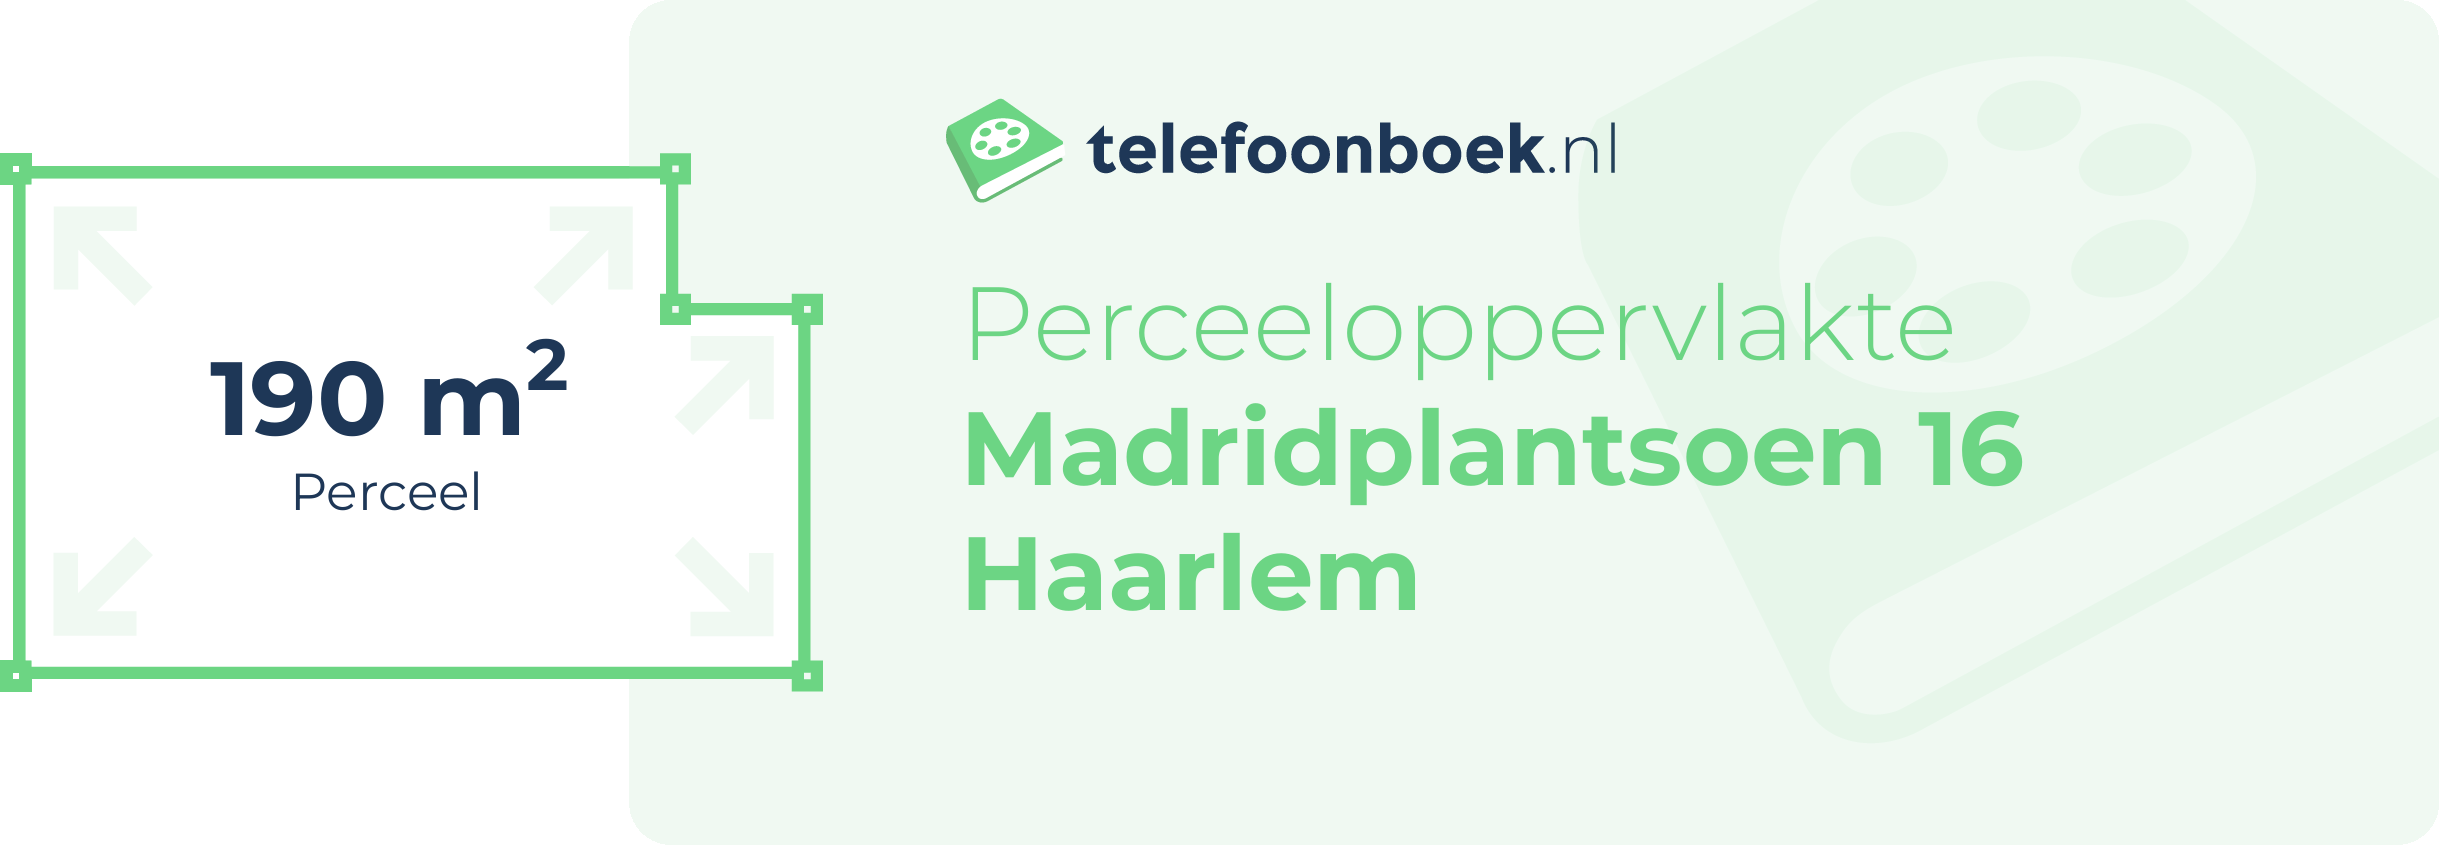 Perceeloppervlakte Madridplantsoen 16 Haarlem